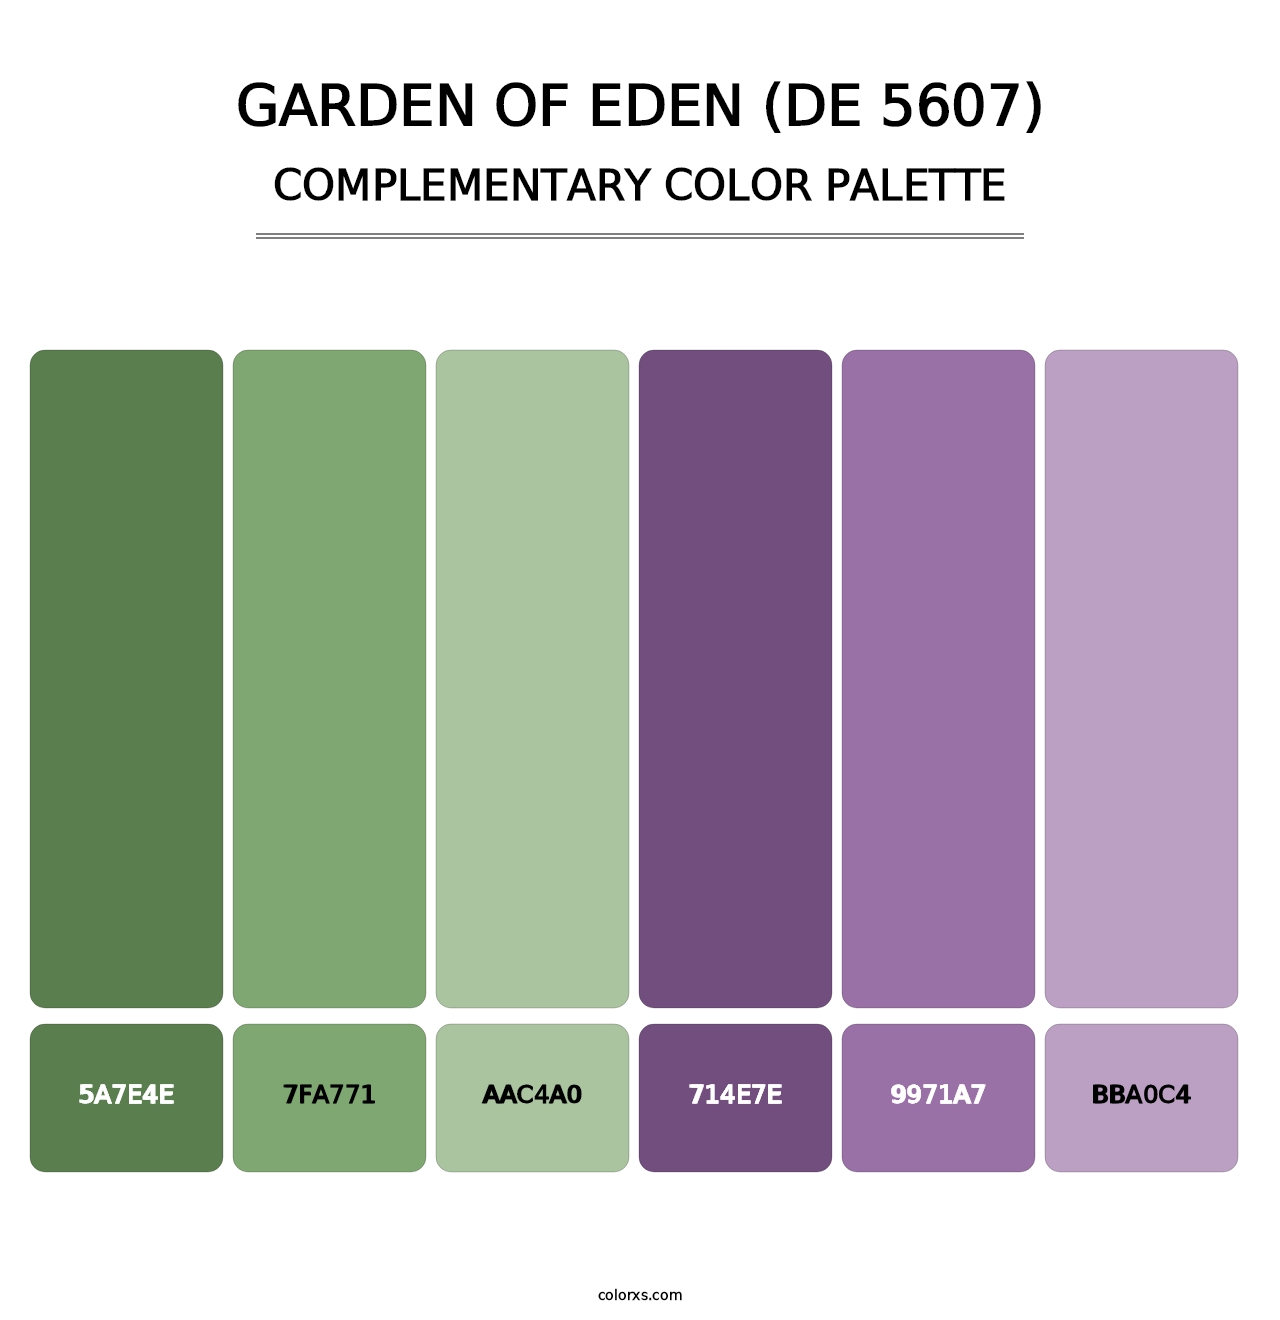 Garden of Eden (DE 5607) - Complementary Color Palette